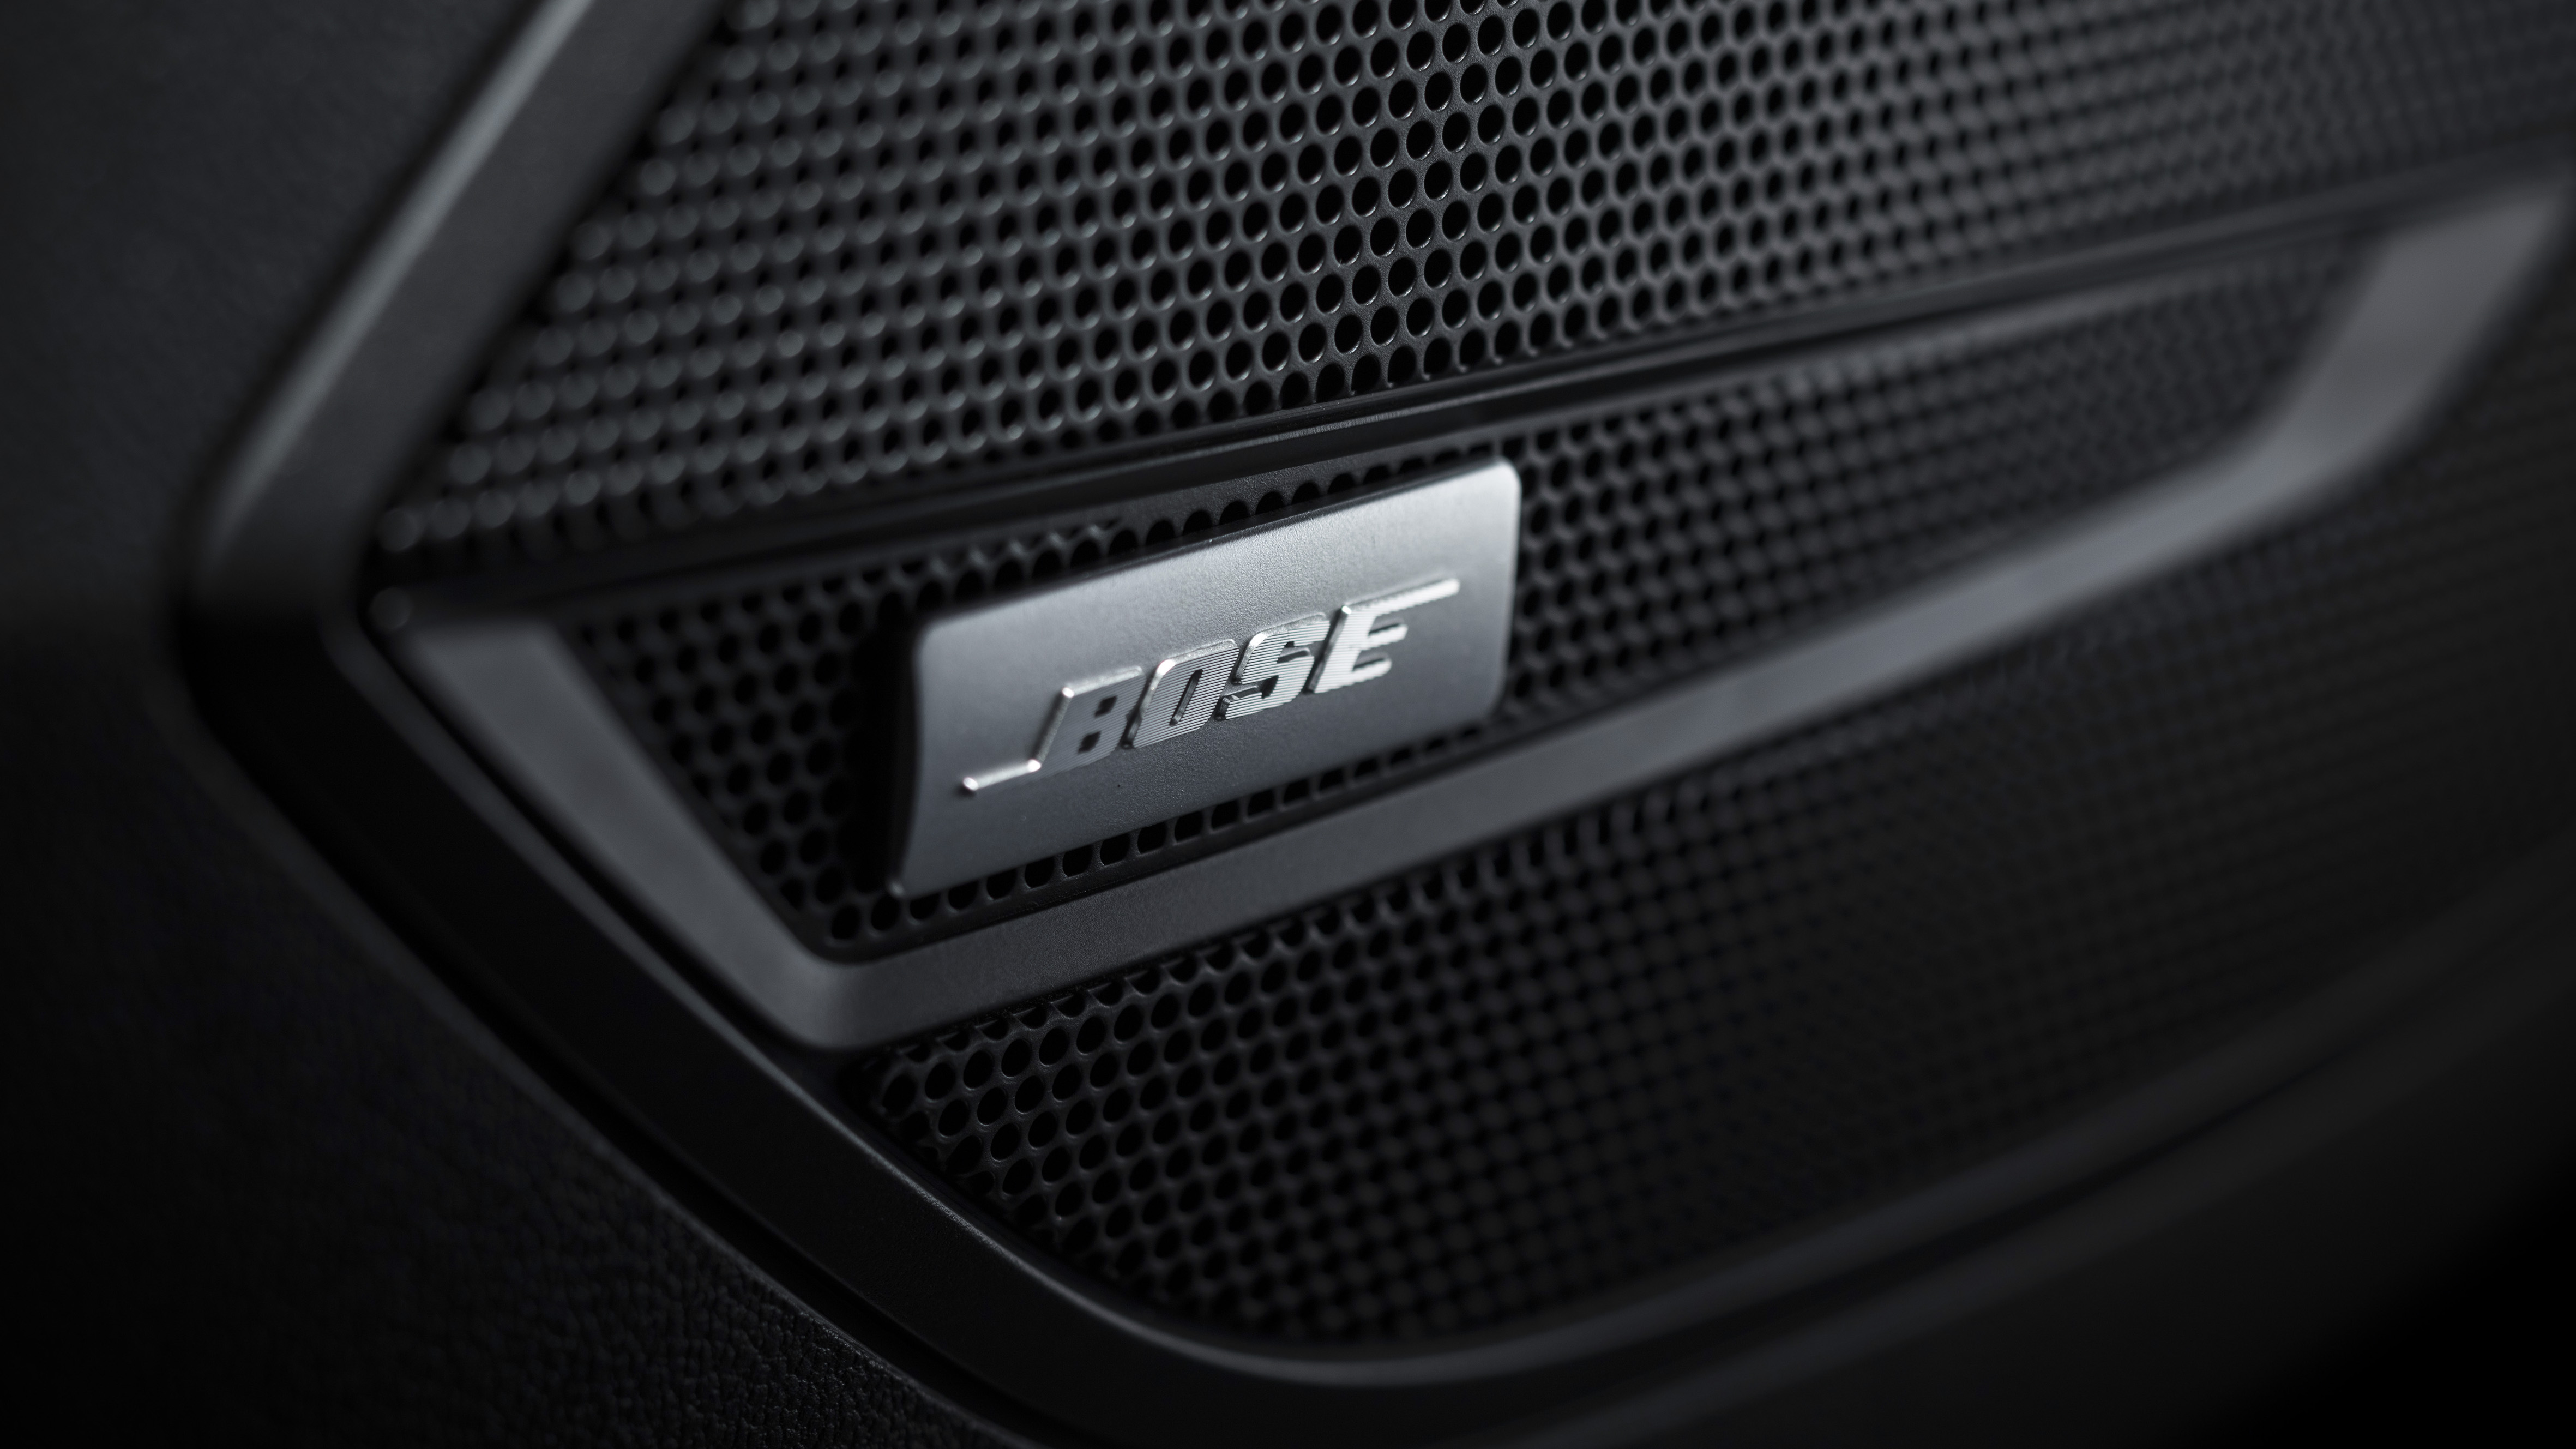 Bose звук. Opel Insignia Bose Sound System. Bose динамики на Опель Инсигния. Opel Insignia 2018 Bose. Opel Insignia 2018 Bose Sound System.